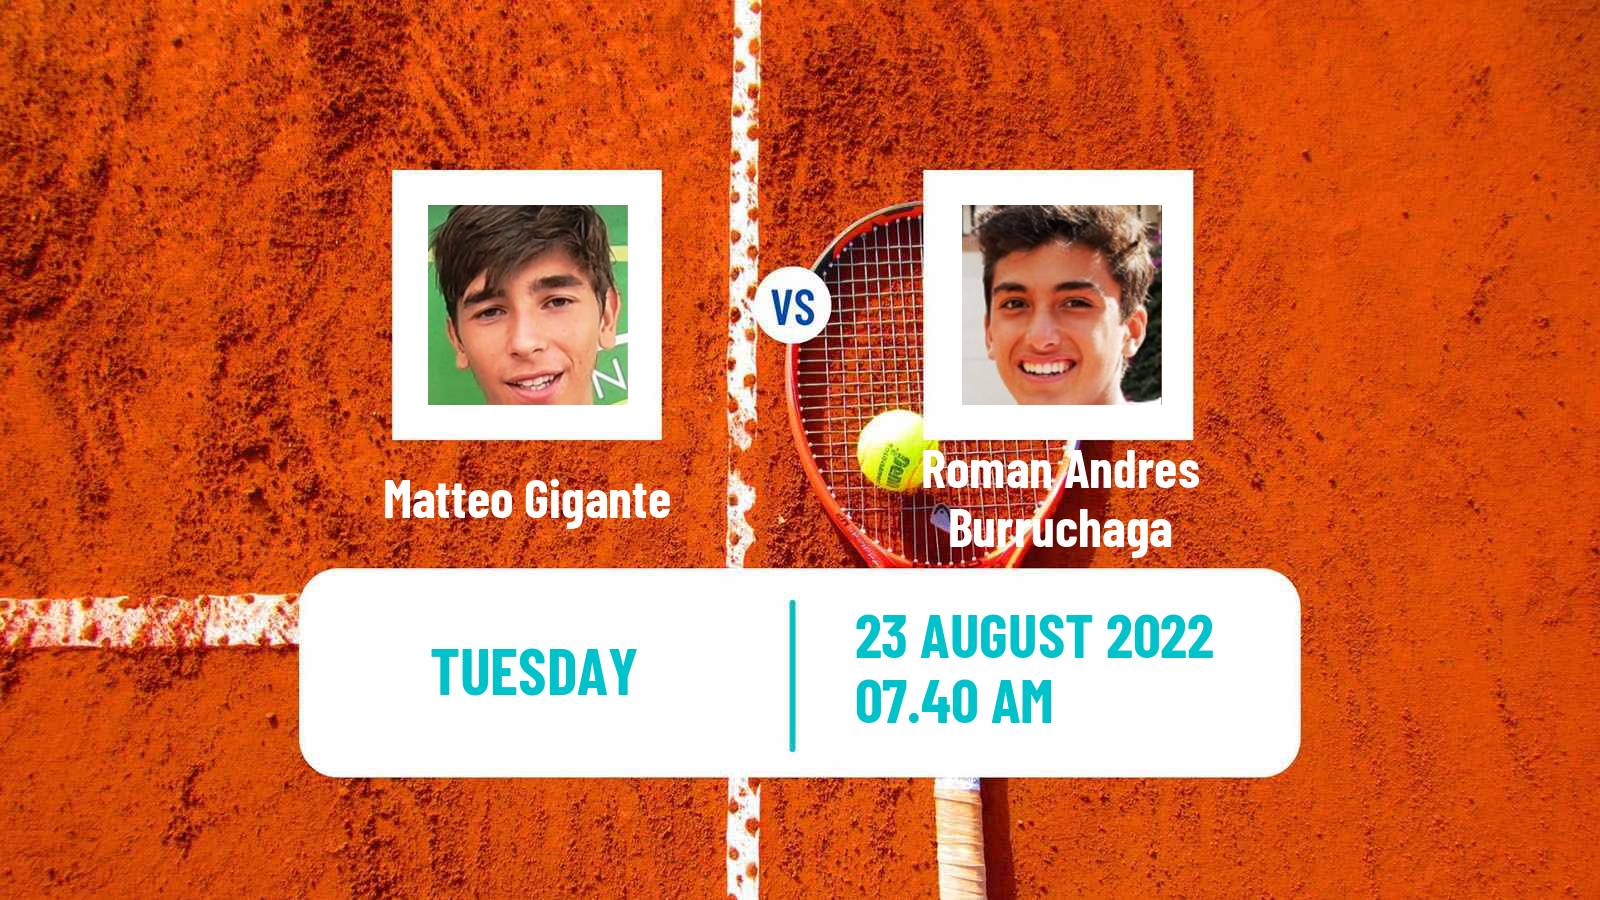 Tennis ATP Challenger Matteo Gigante - Roman Andres Burruchaga